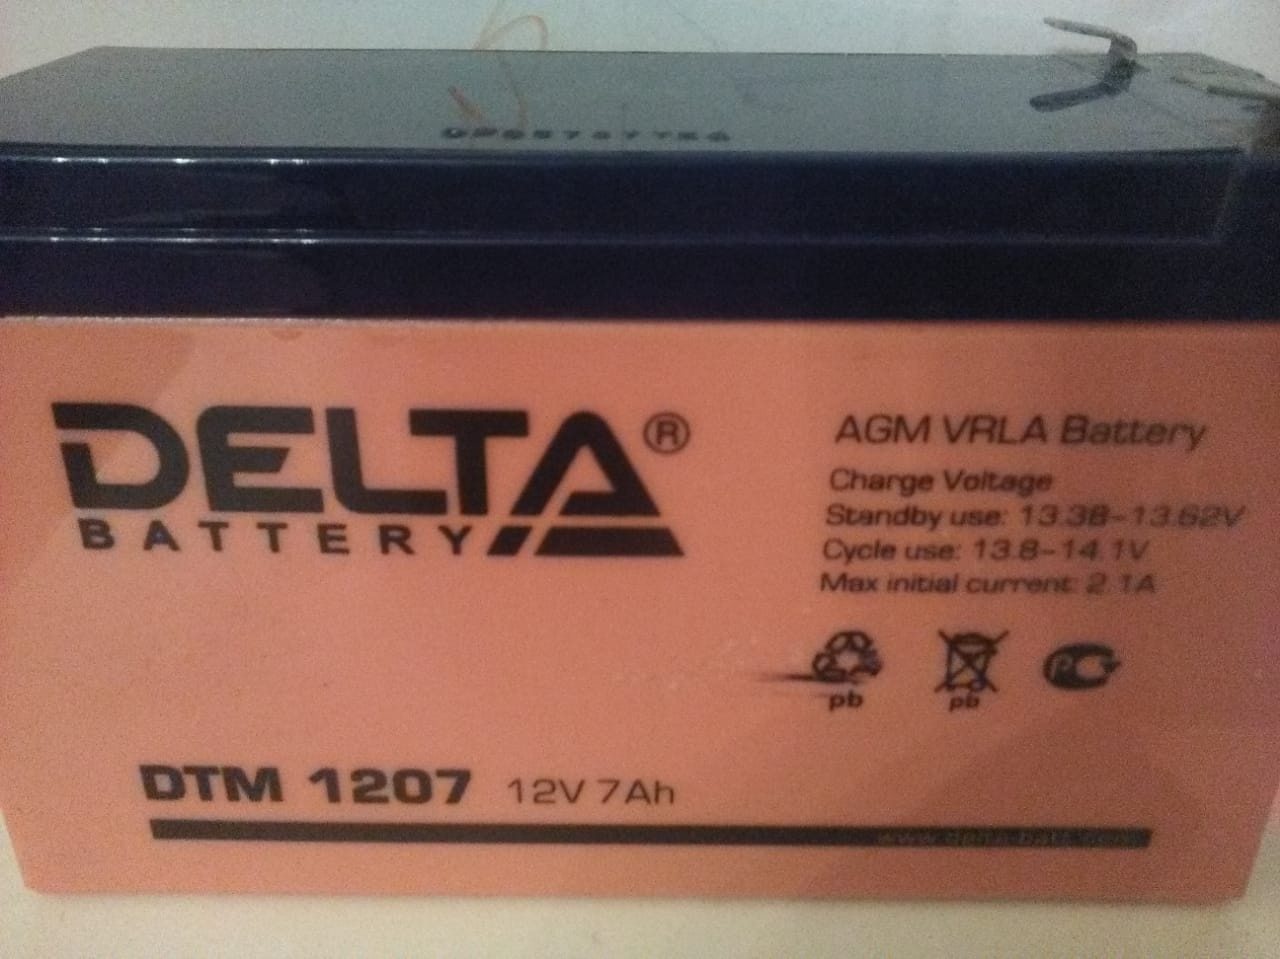 7 ah 12v. Аккумуляторная батарея Delta DT 12100 (12v / 100ah). Дельта аккумулятор 12v 7ah. Батарея Delta DT 1207 (12v, 7ah) <DT 1207>. Delta DTM 1207 12v.